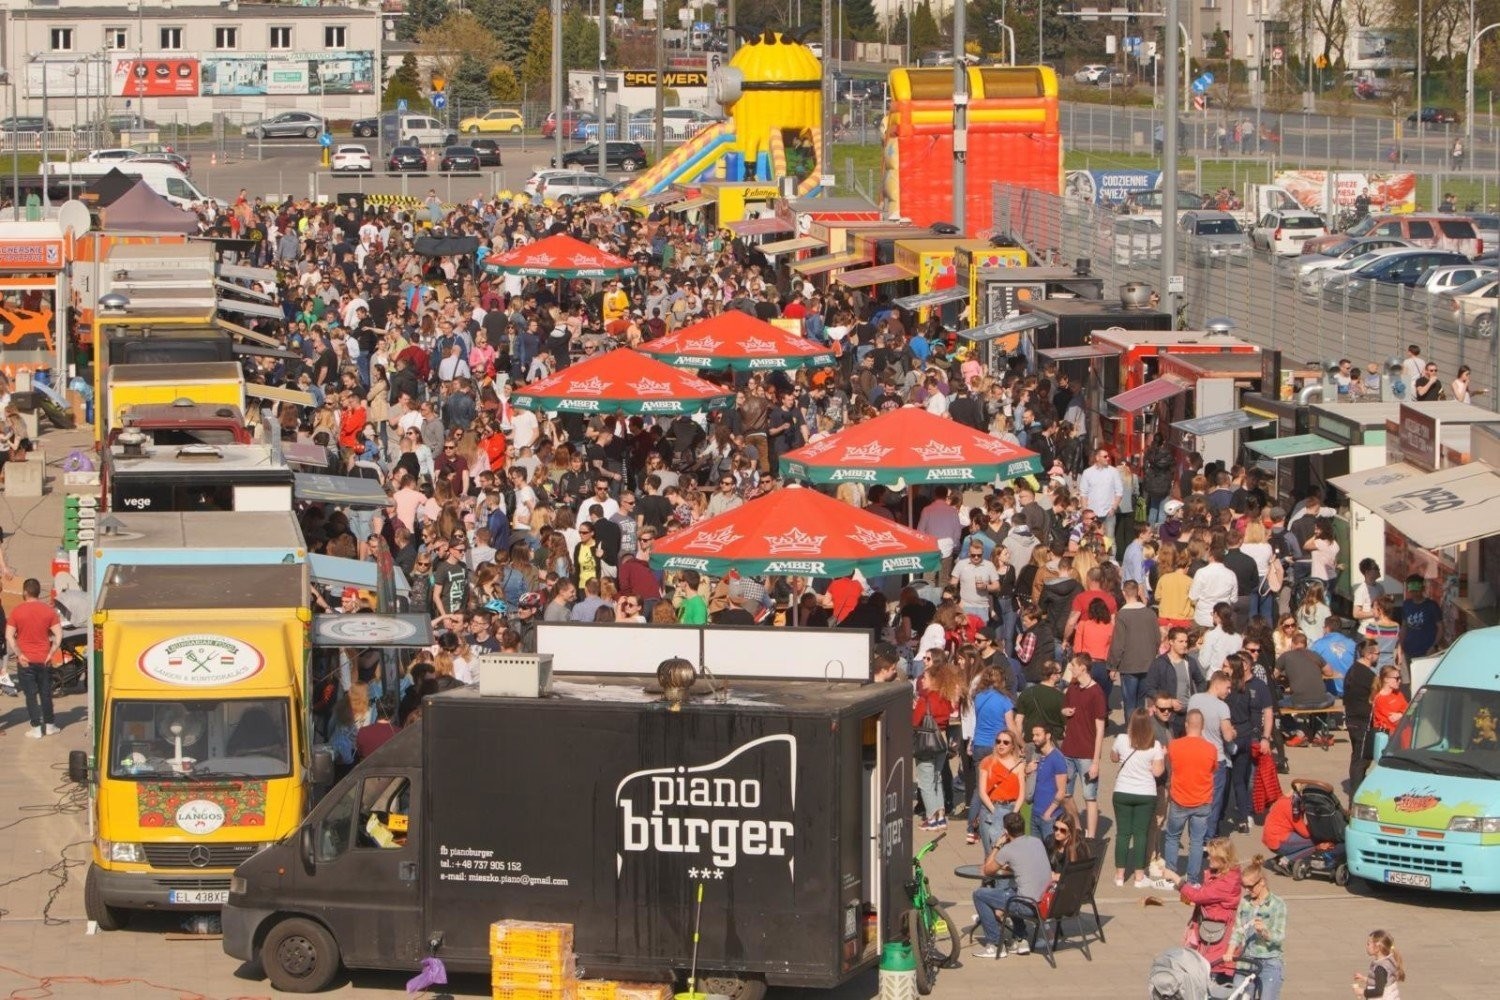 Great Szama (Feast) at the Stadium! The Biggest Food Truck Jamboree in